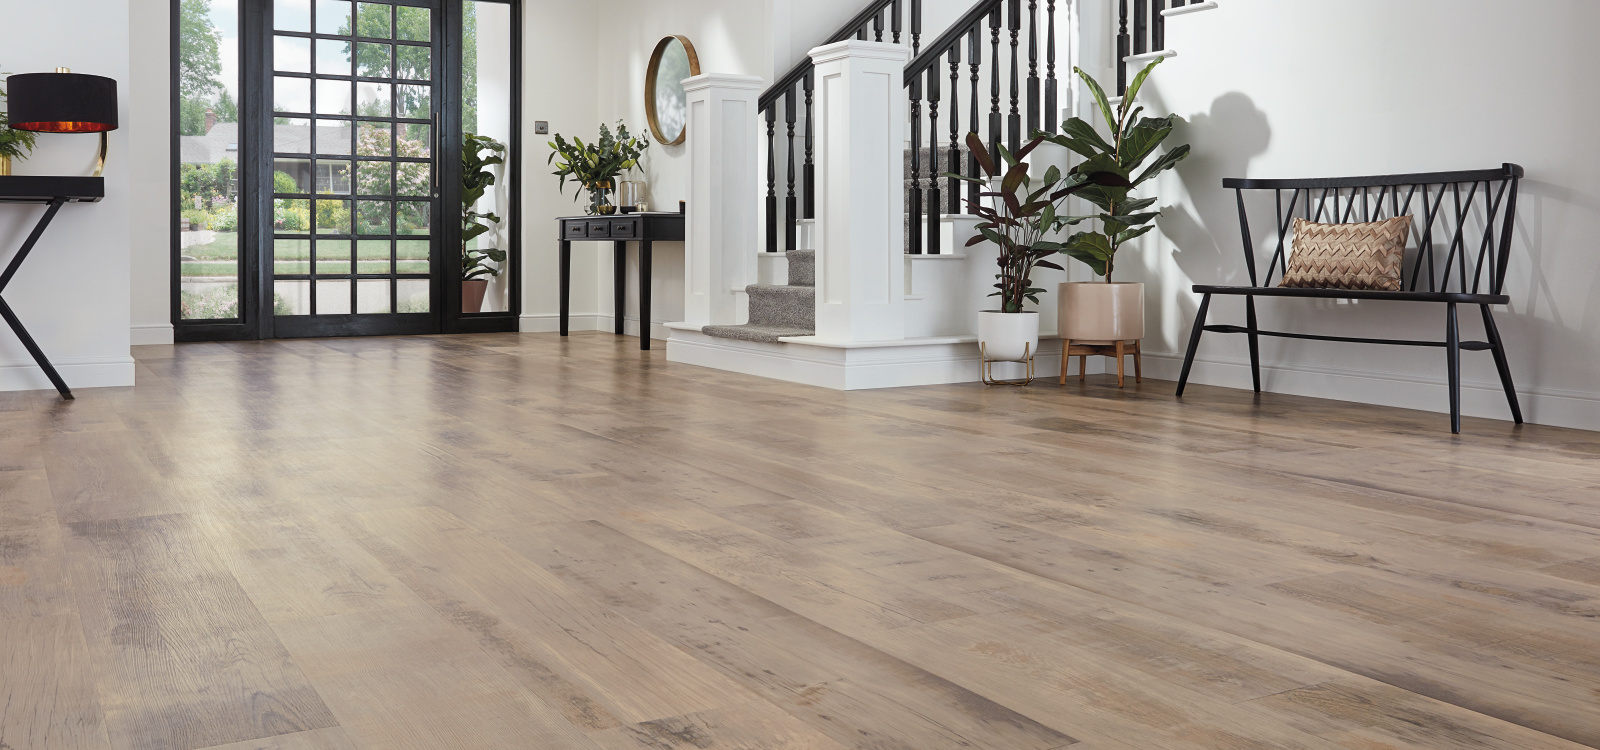 Luxury Vinyl Flooring Tiles Planks, Karndean Laminate Wood Flooring